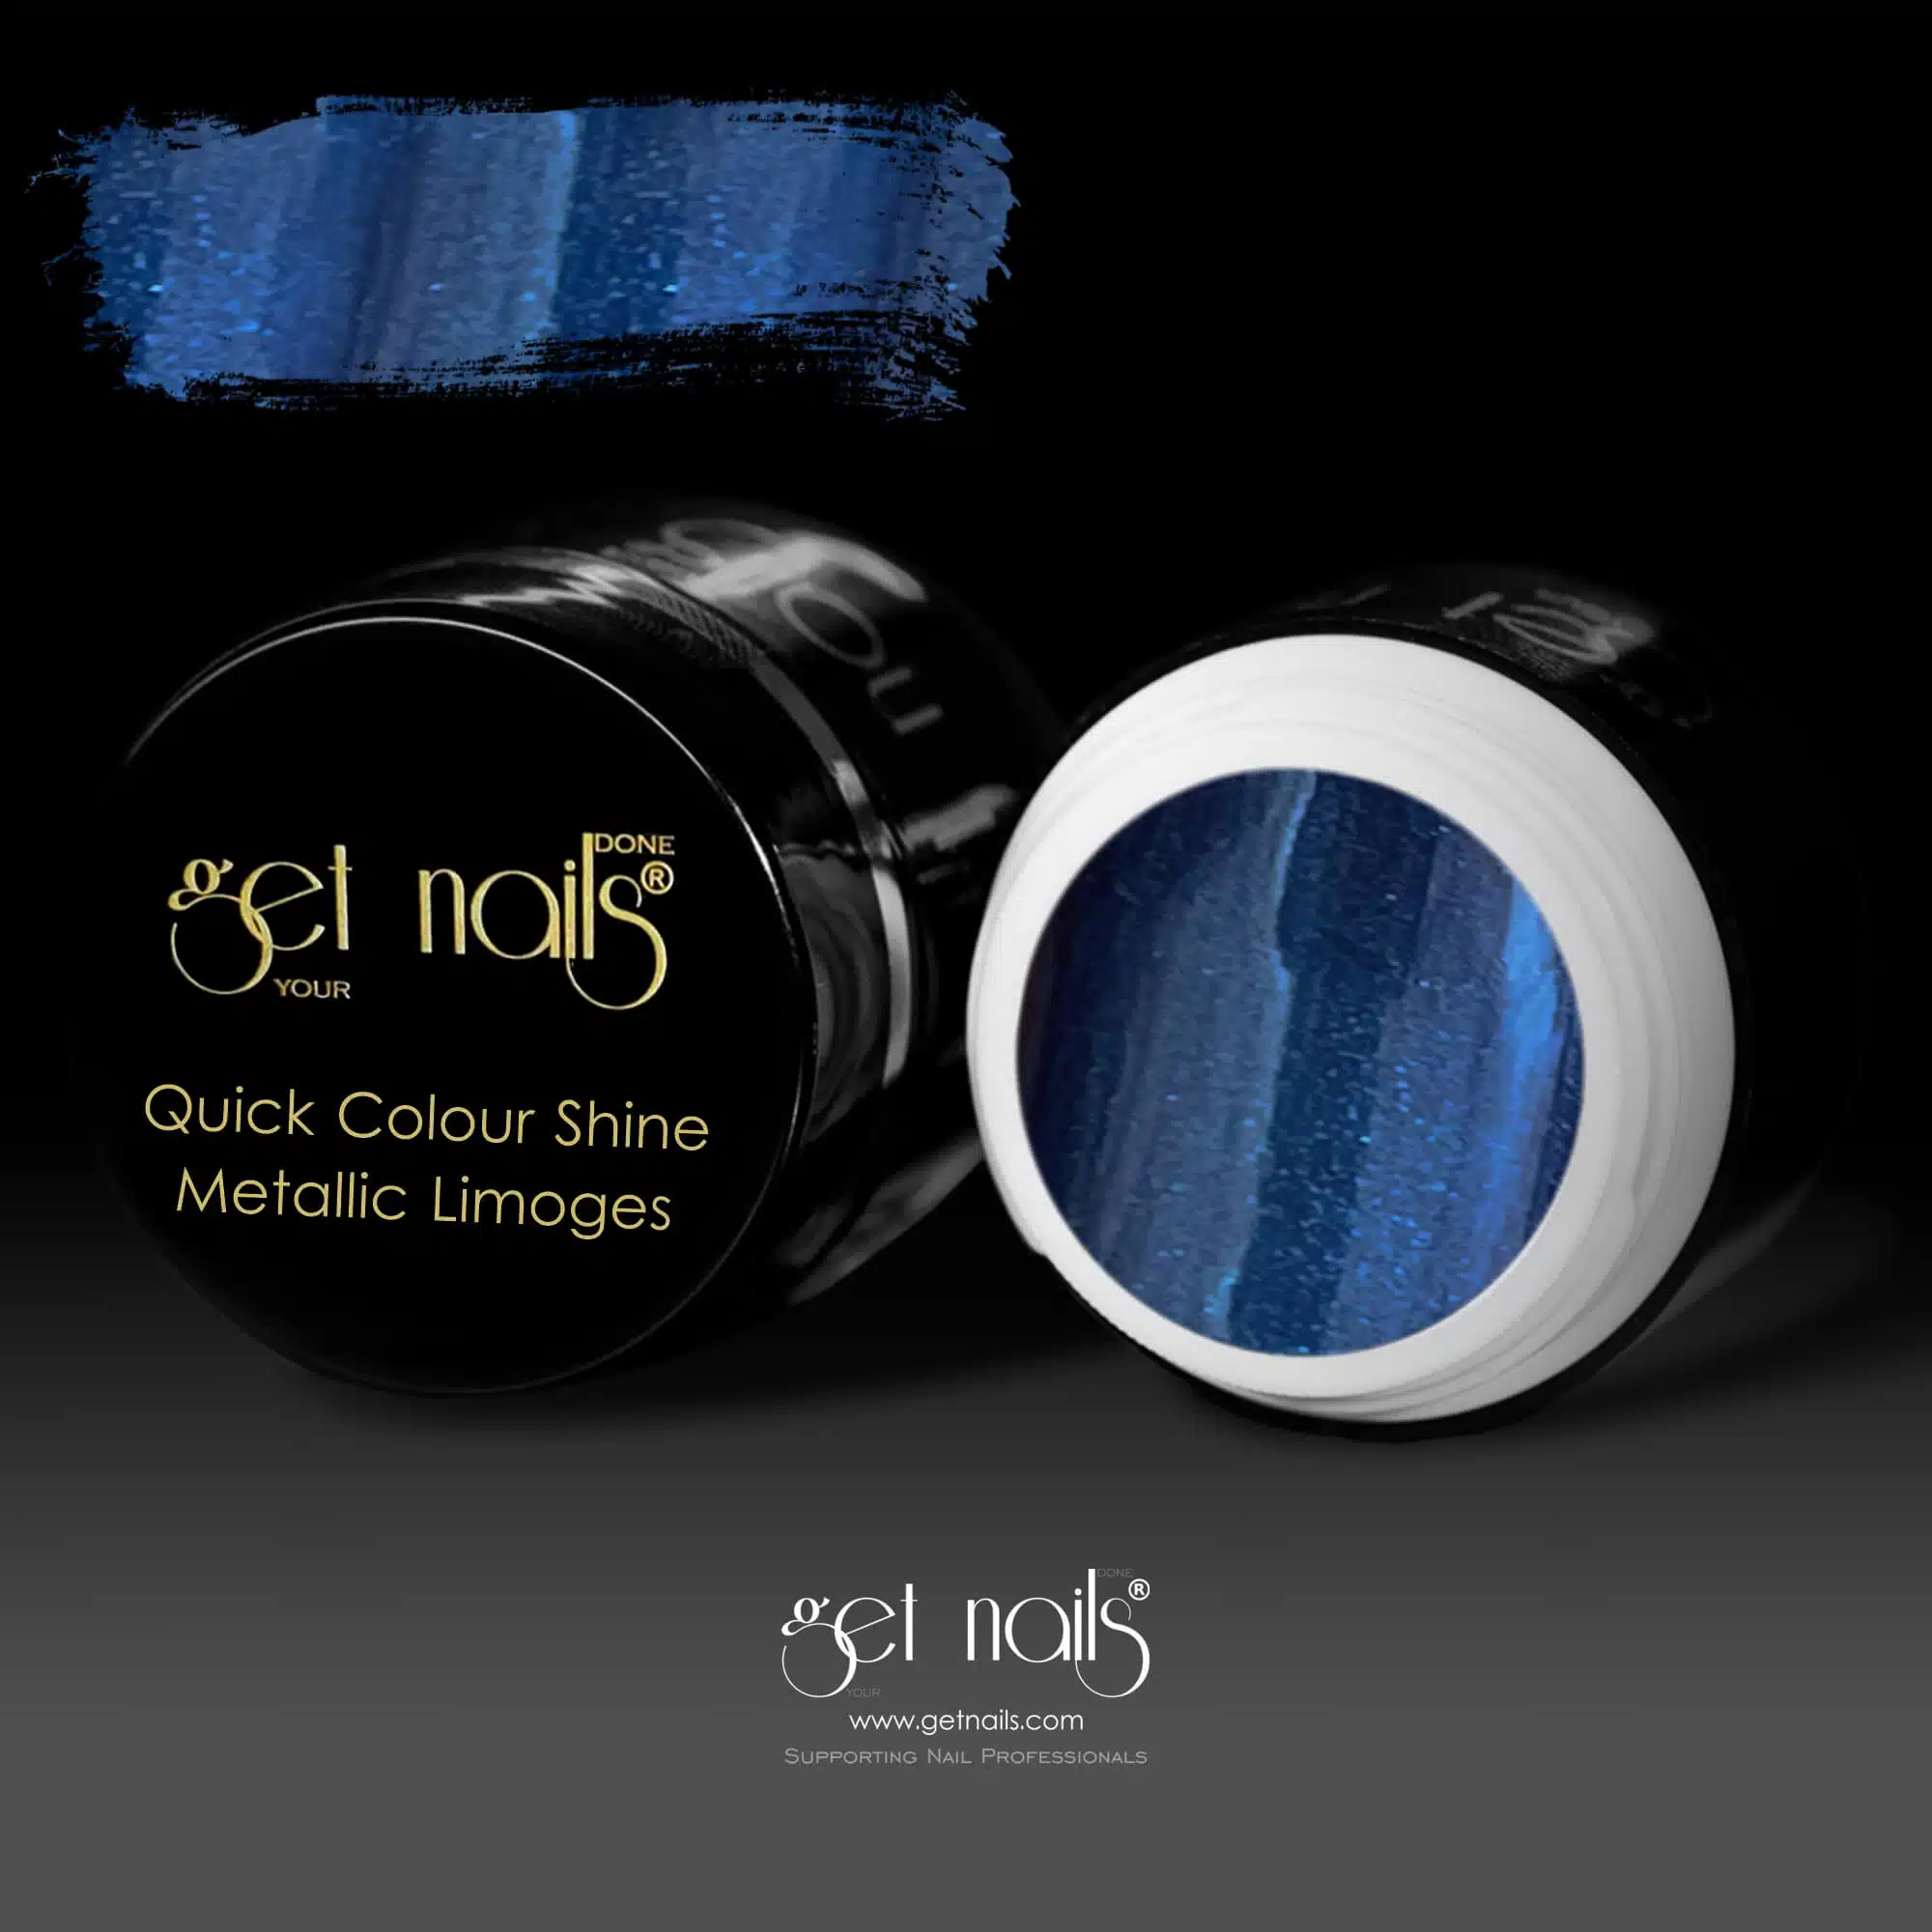 Get Nails Austria - Цветной гель Quick Color Shine Metallic Limoges 5g